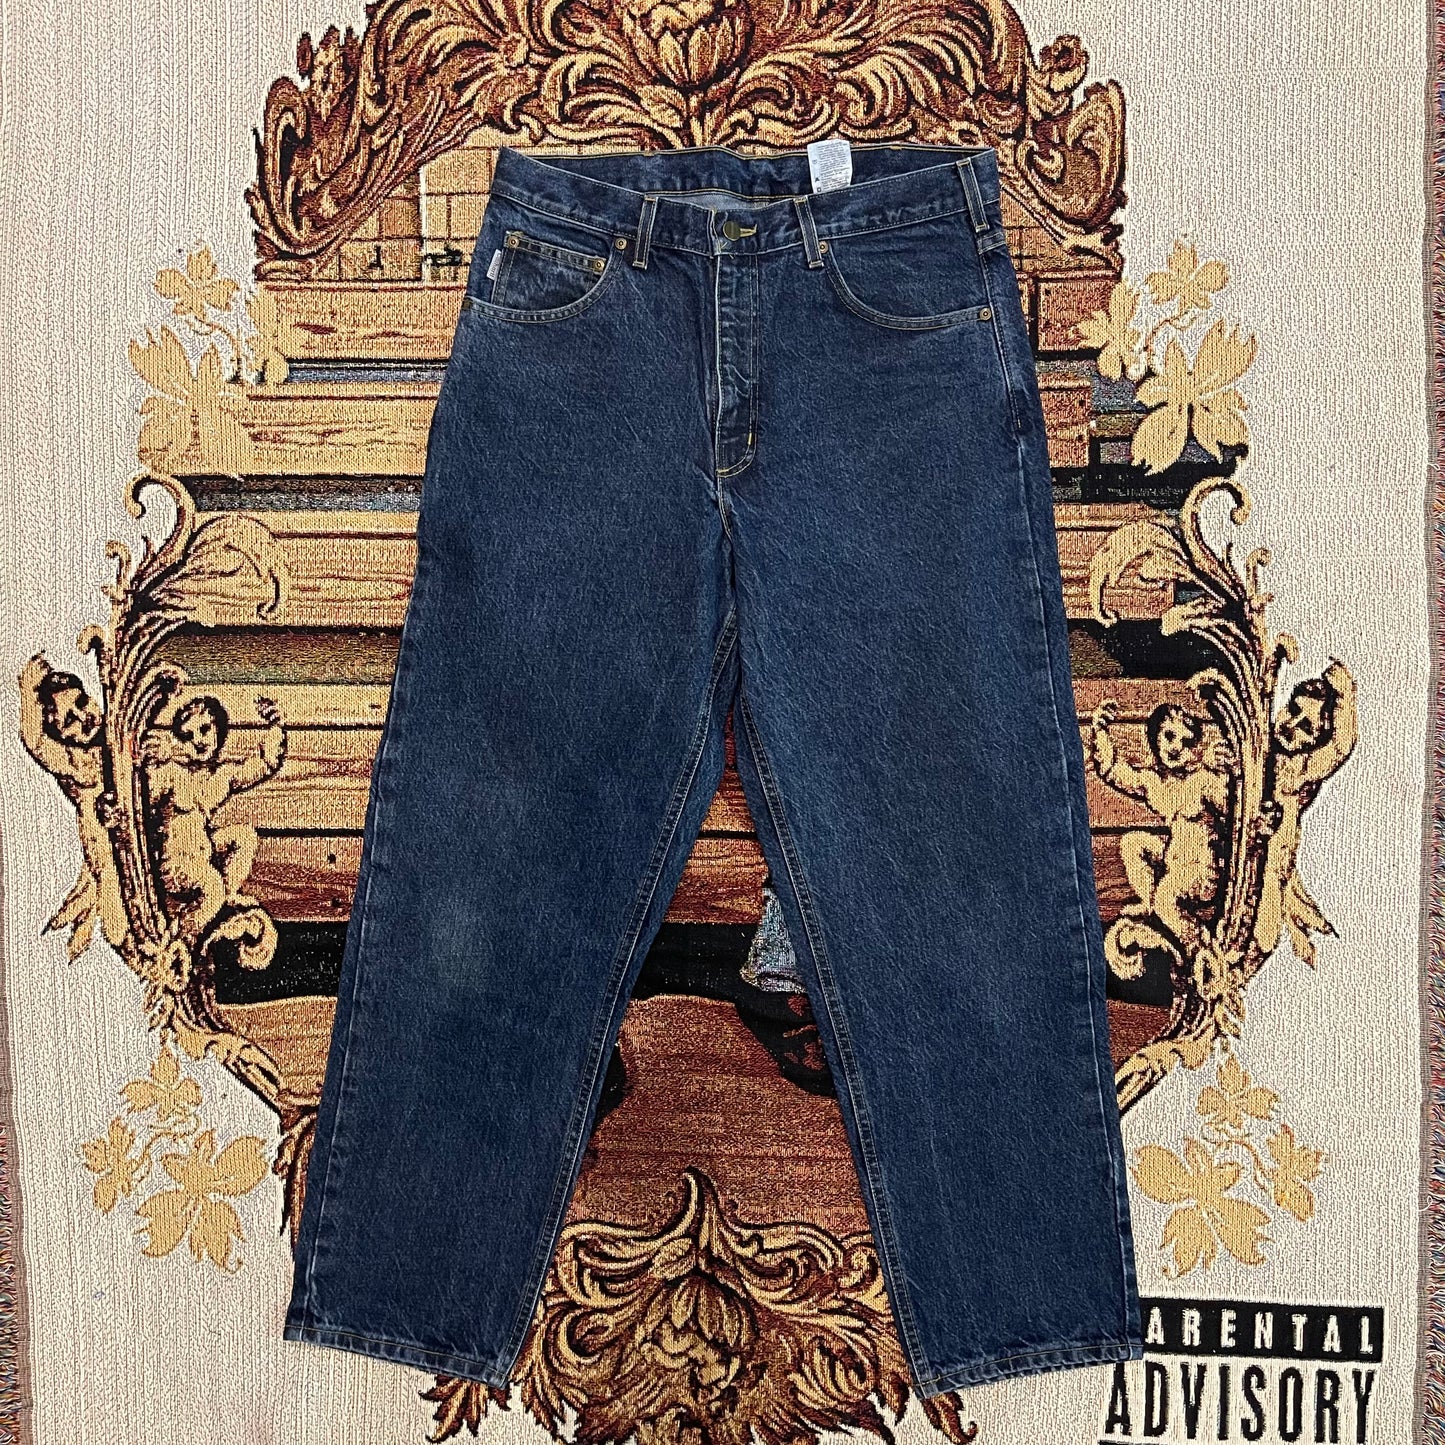 Vintage Carhartt denim jeans